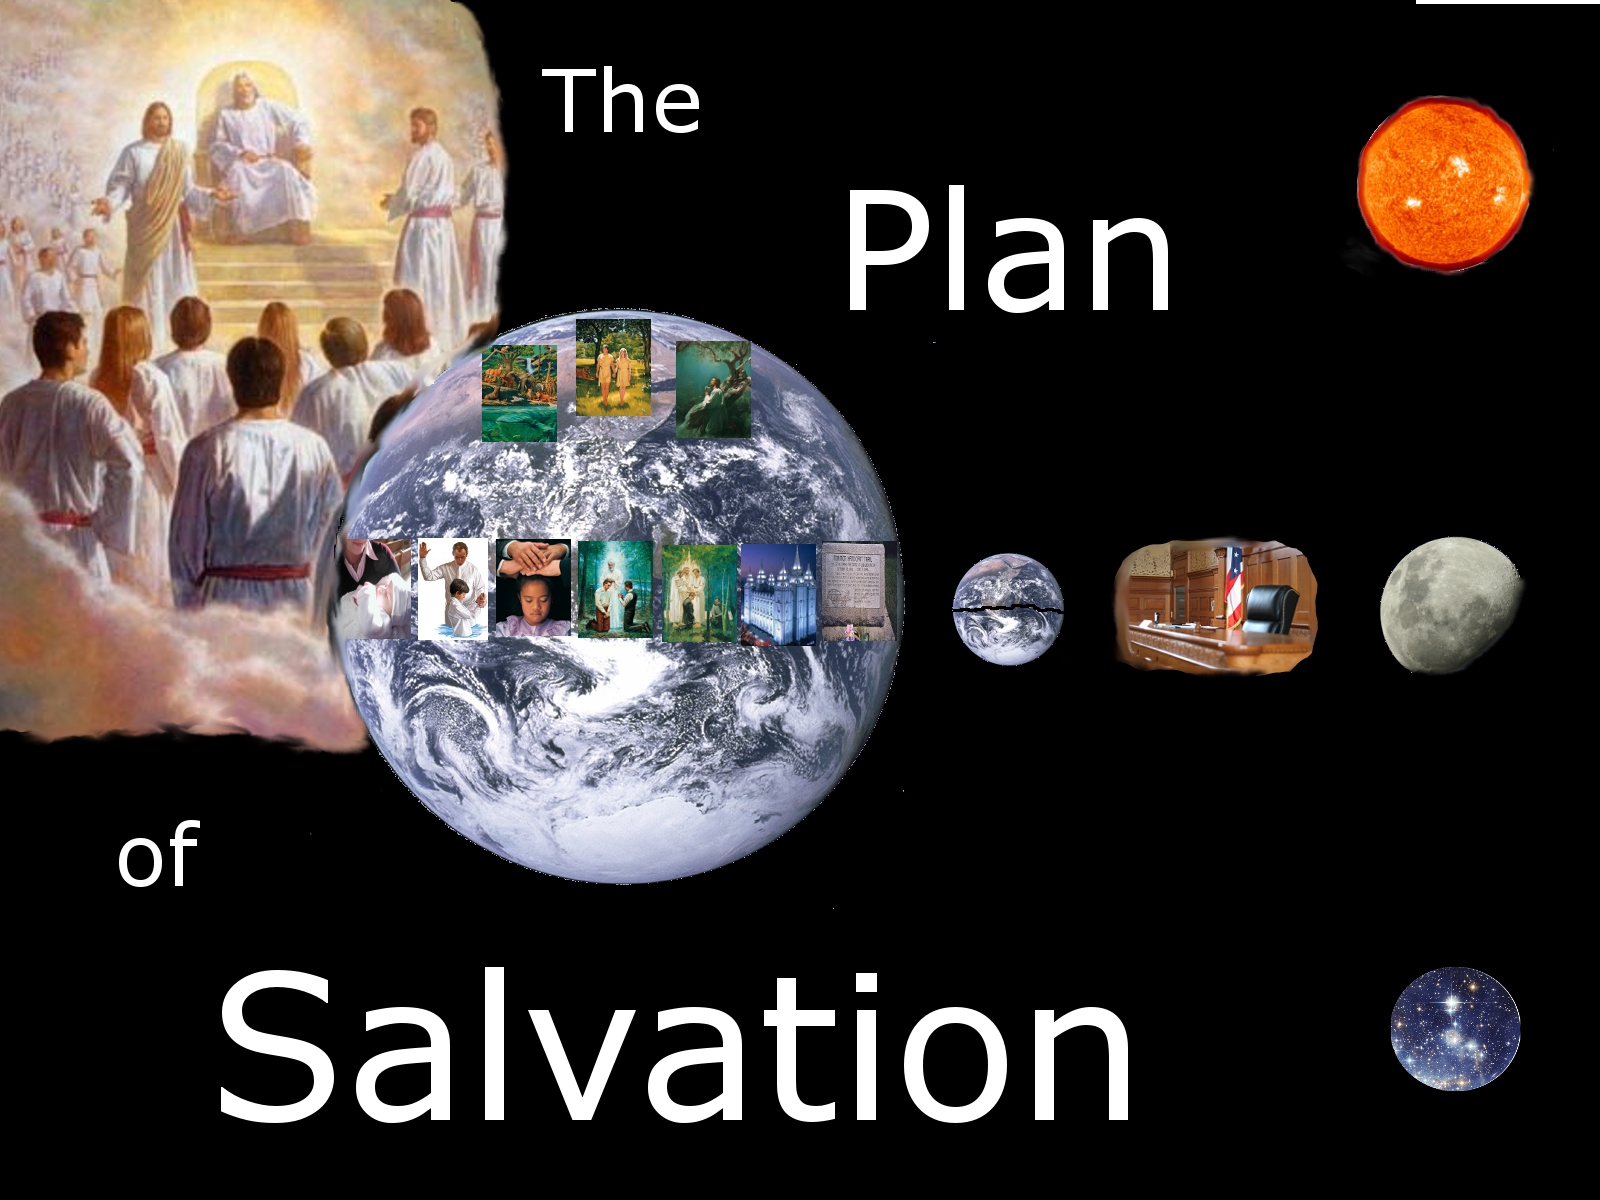 k-leena-creates-lds-plan-of-salvation